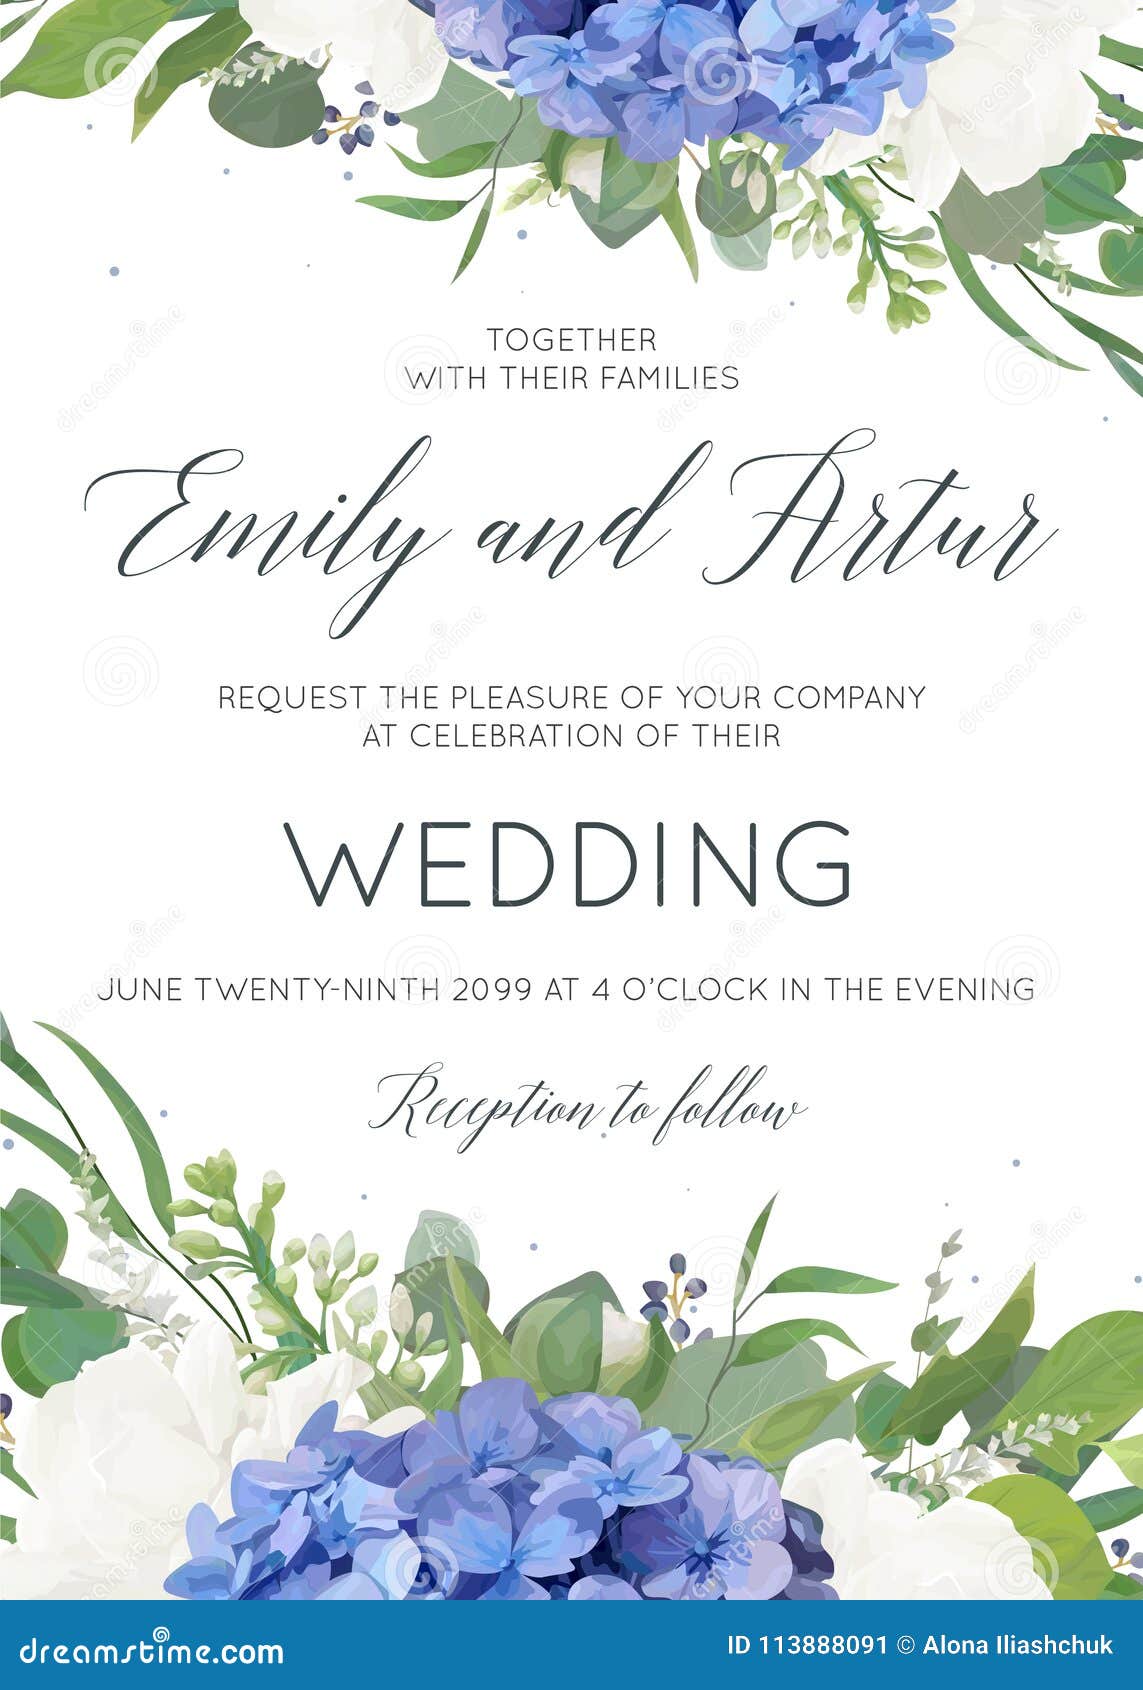 wedding floral invite, invitation, card  with elegant bouquet of blue hydrangea flowers, white garden roses, green eucalyptu